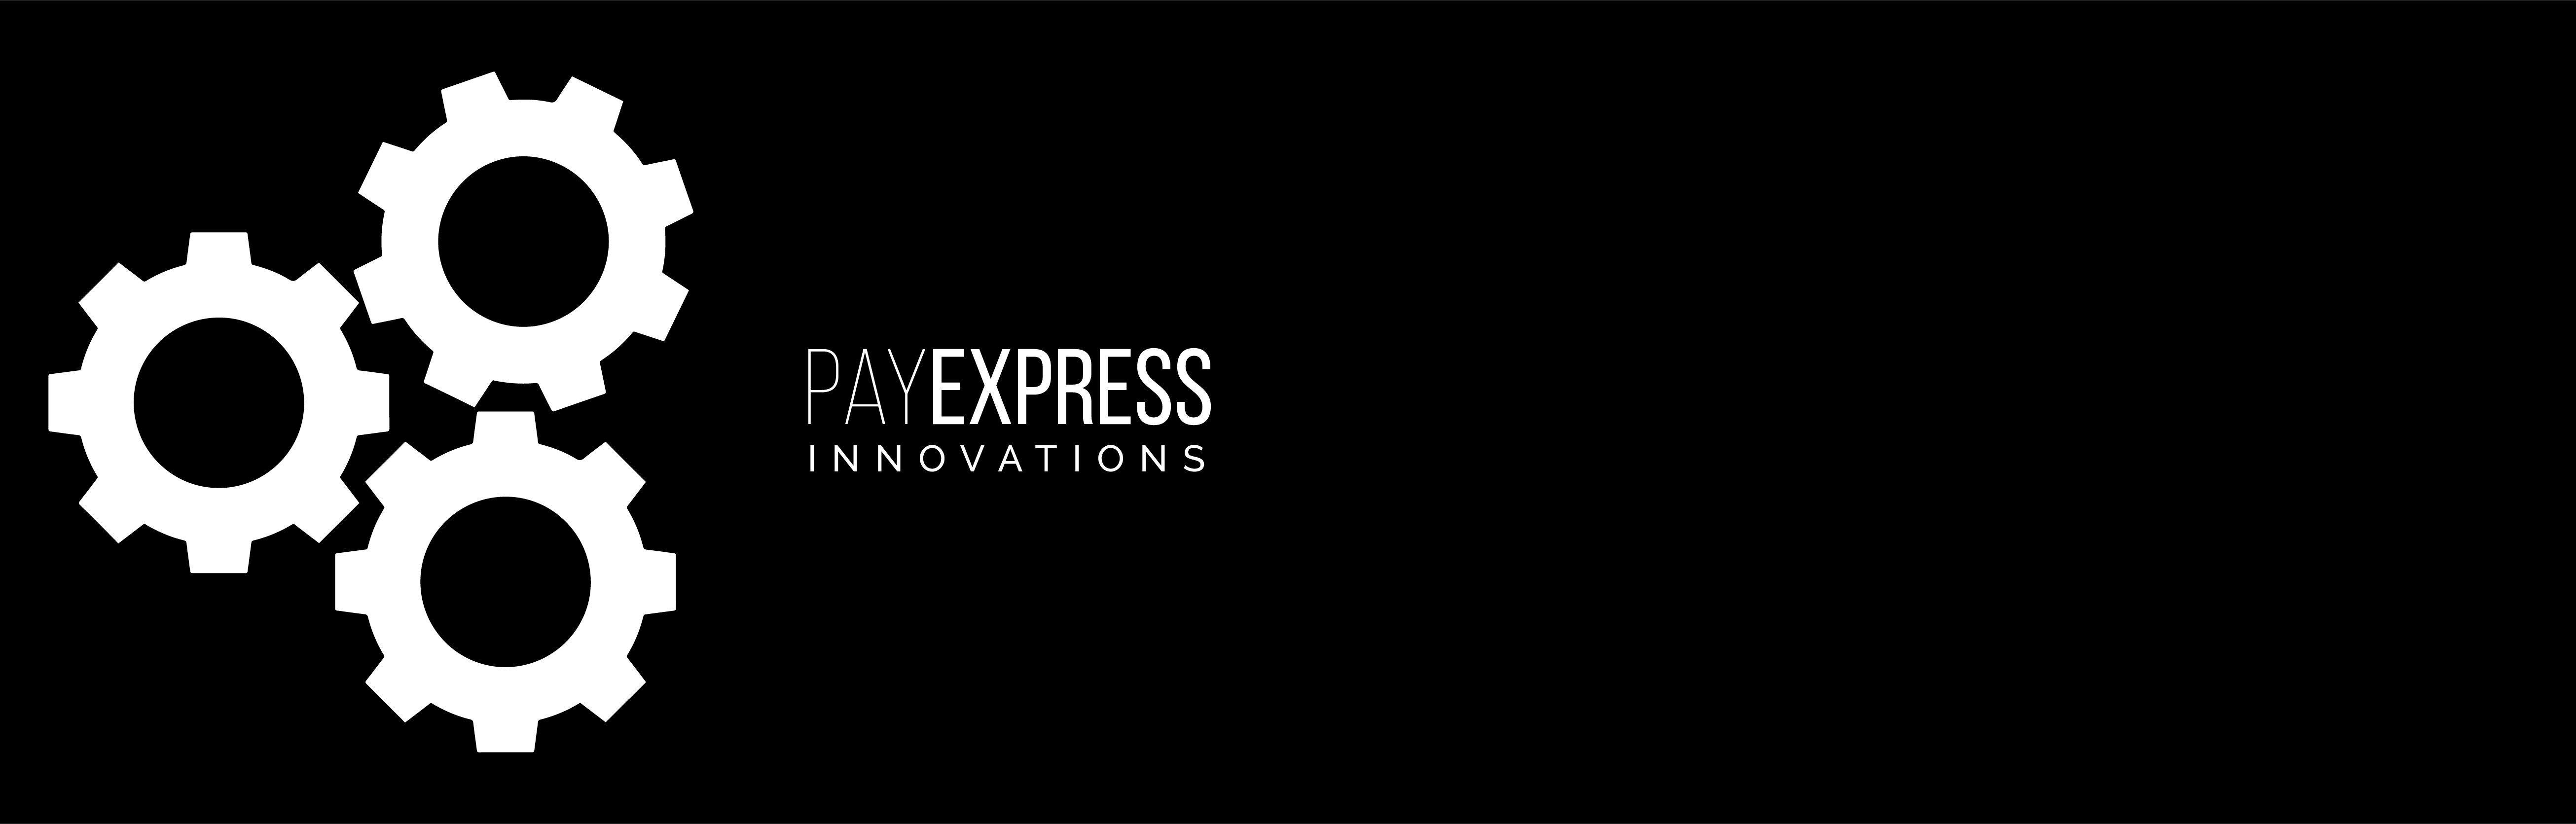 PayExpress, Inc. Innovations